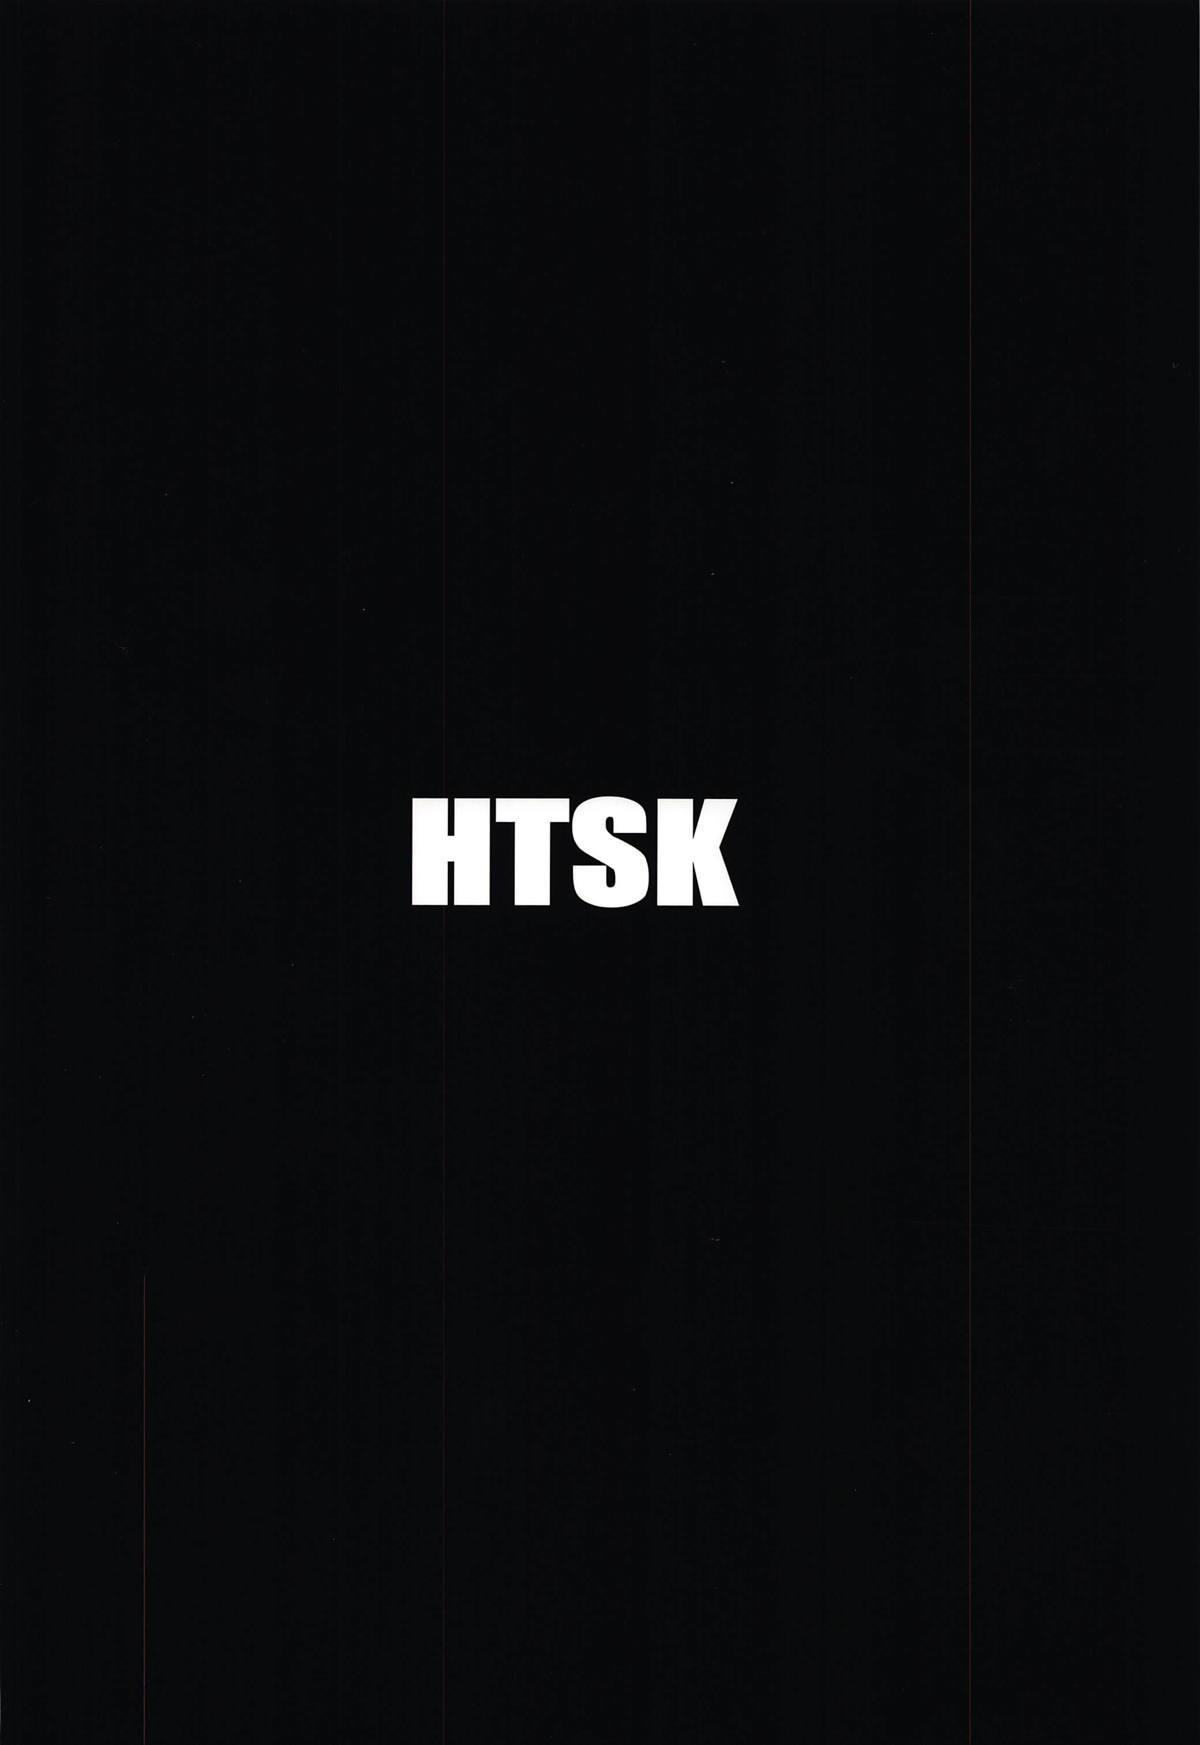 HTSK9 26